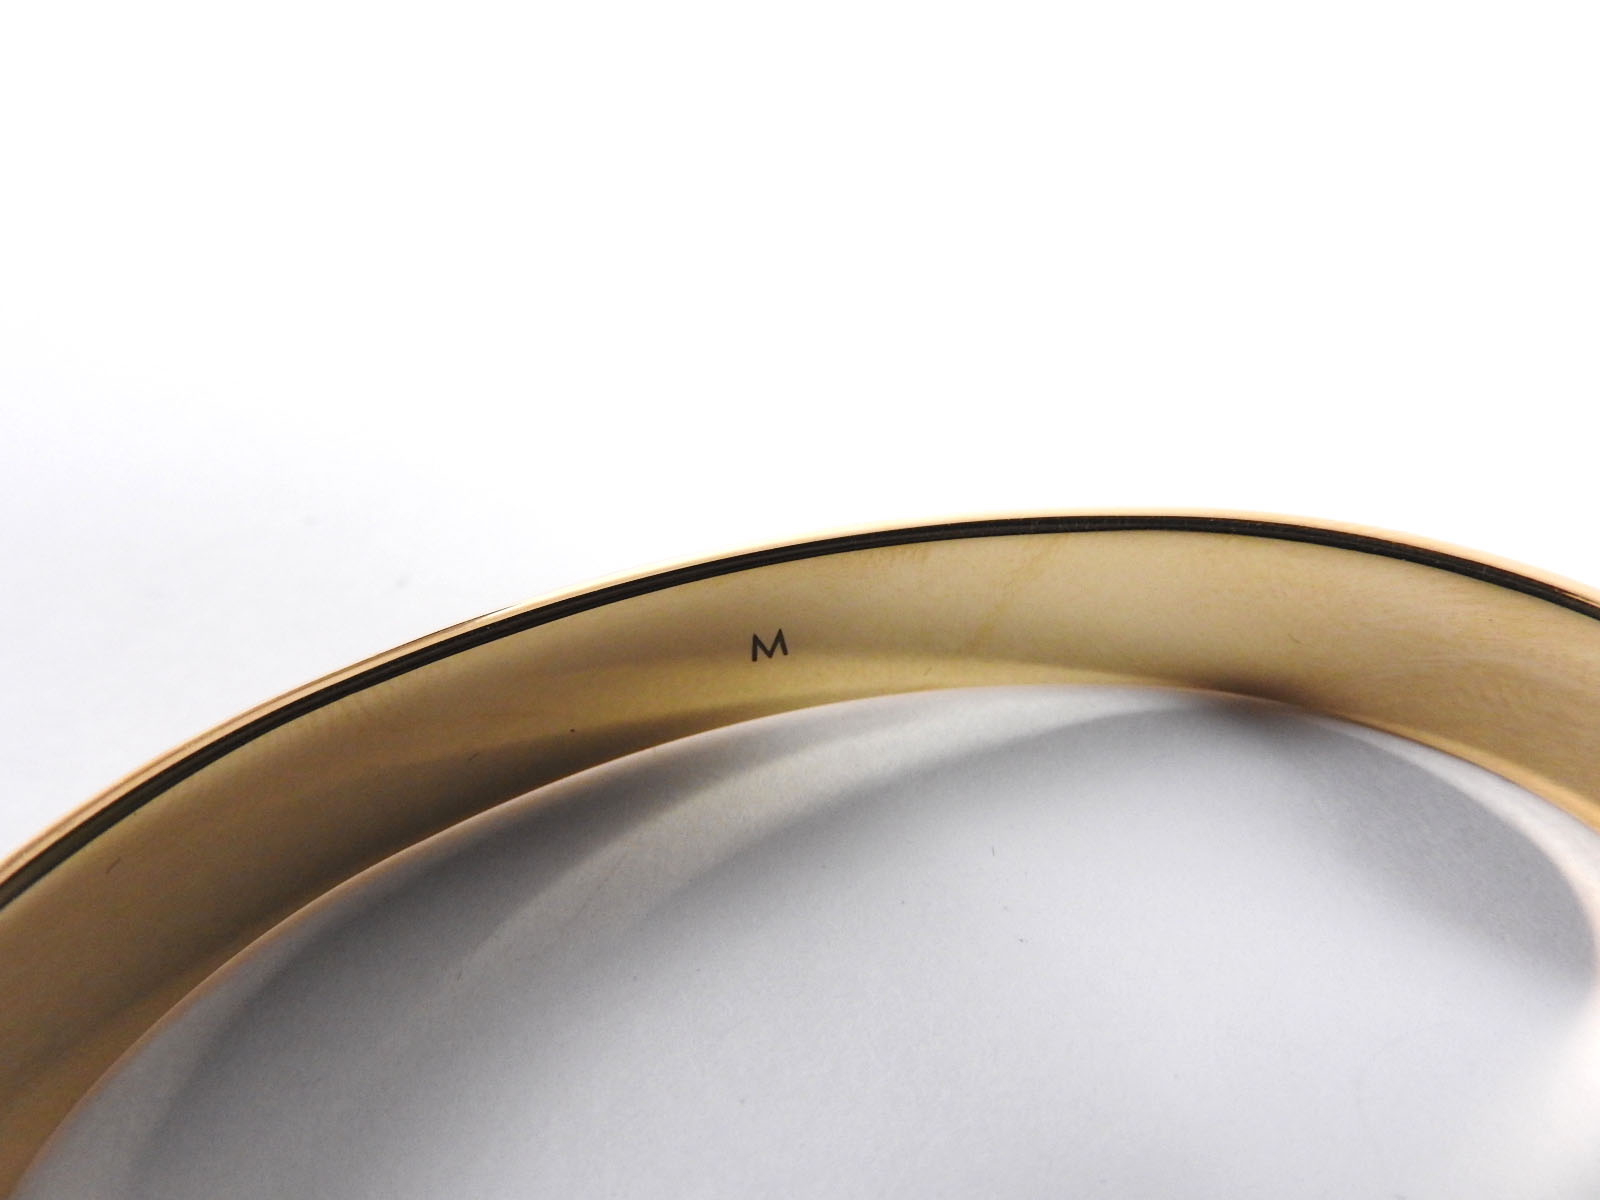 LOUIS VUITTON Cuff Nanogram LV Monogram Bangle Bracelet Gold Plated M00252 A5465 | eBay